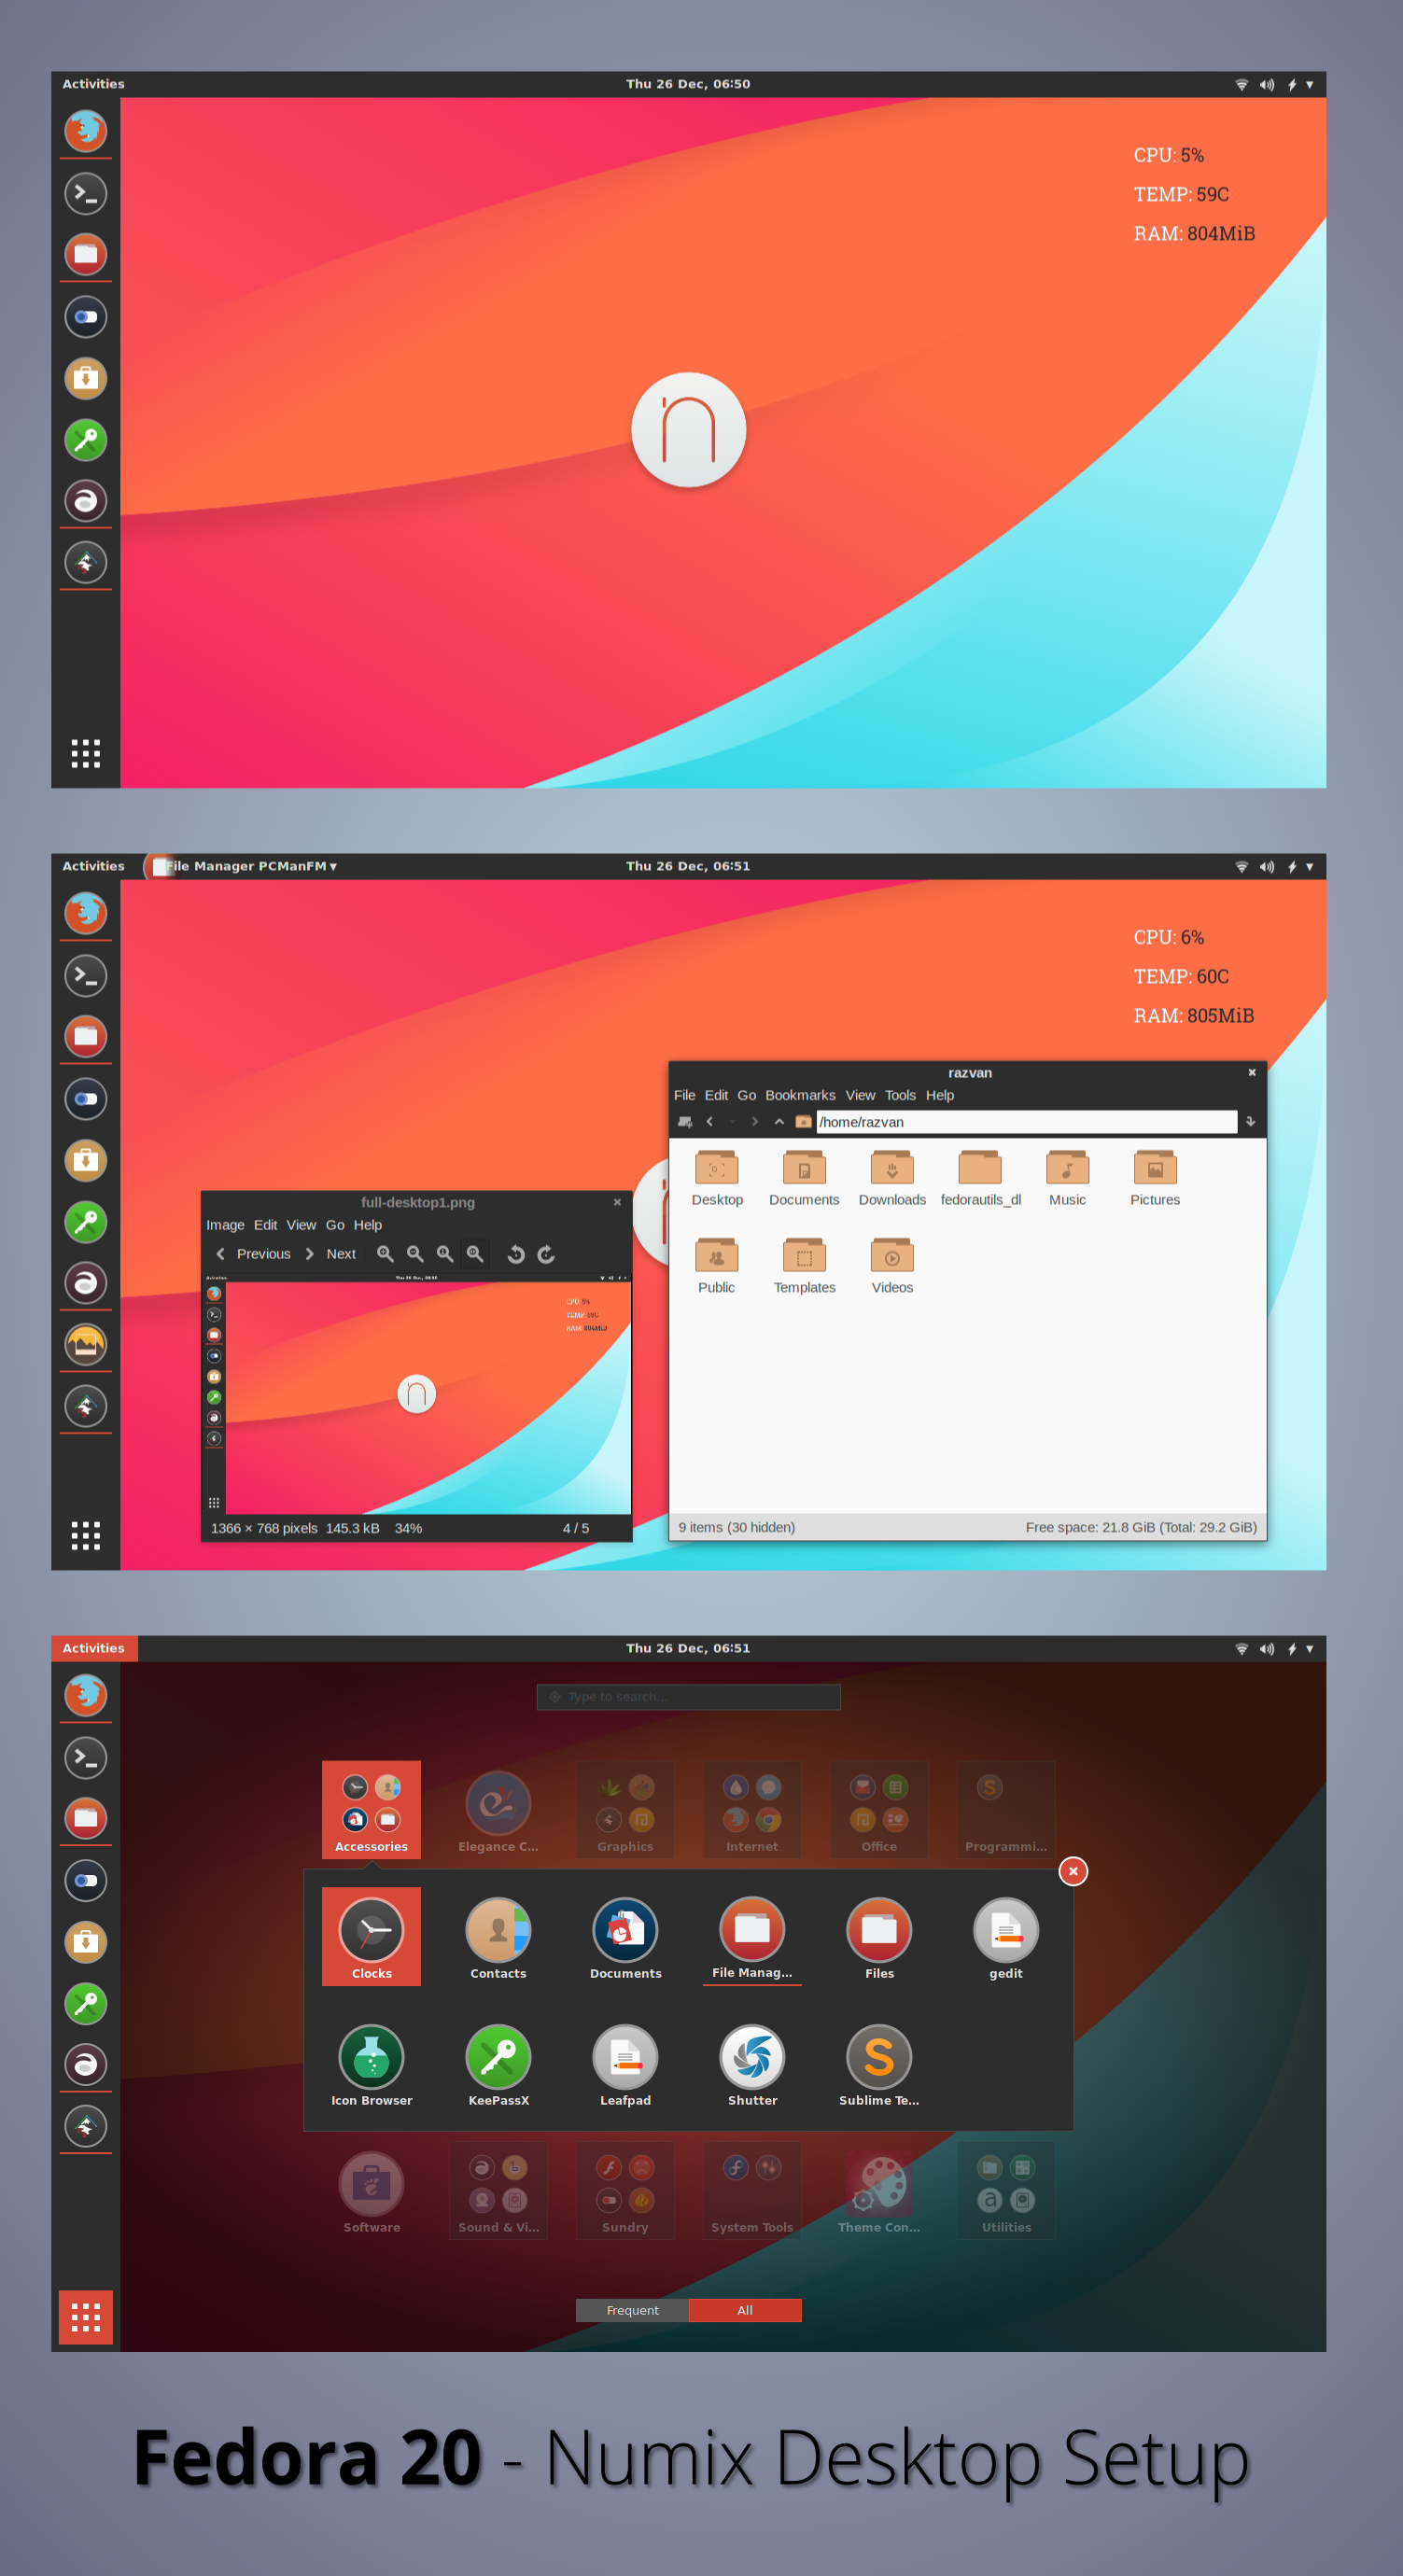 Numix Desktop Setup - Fedora 20